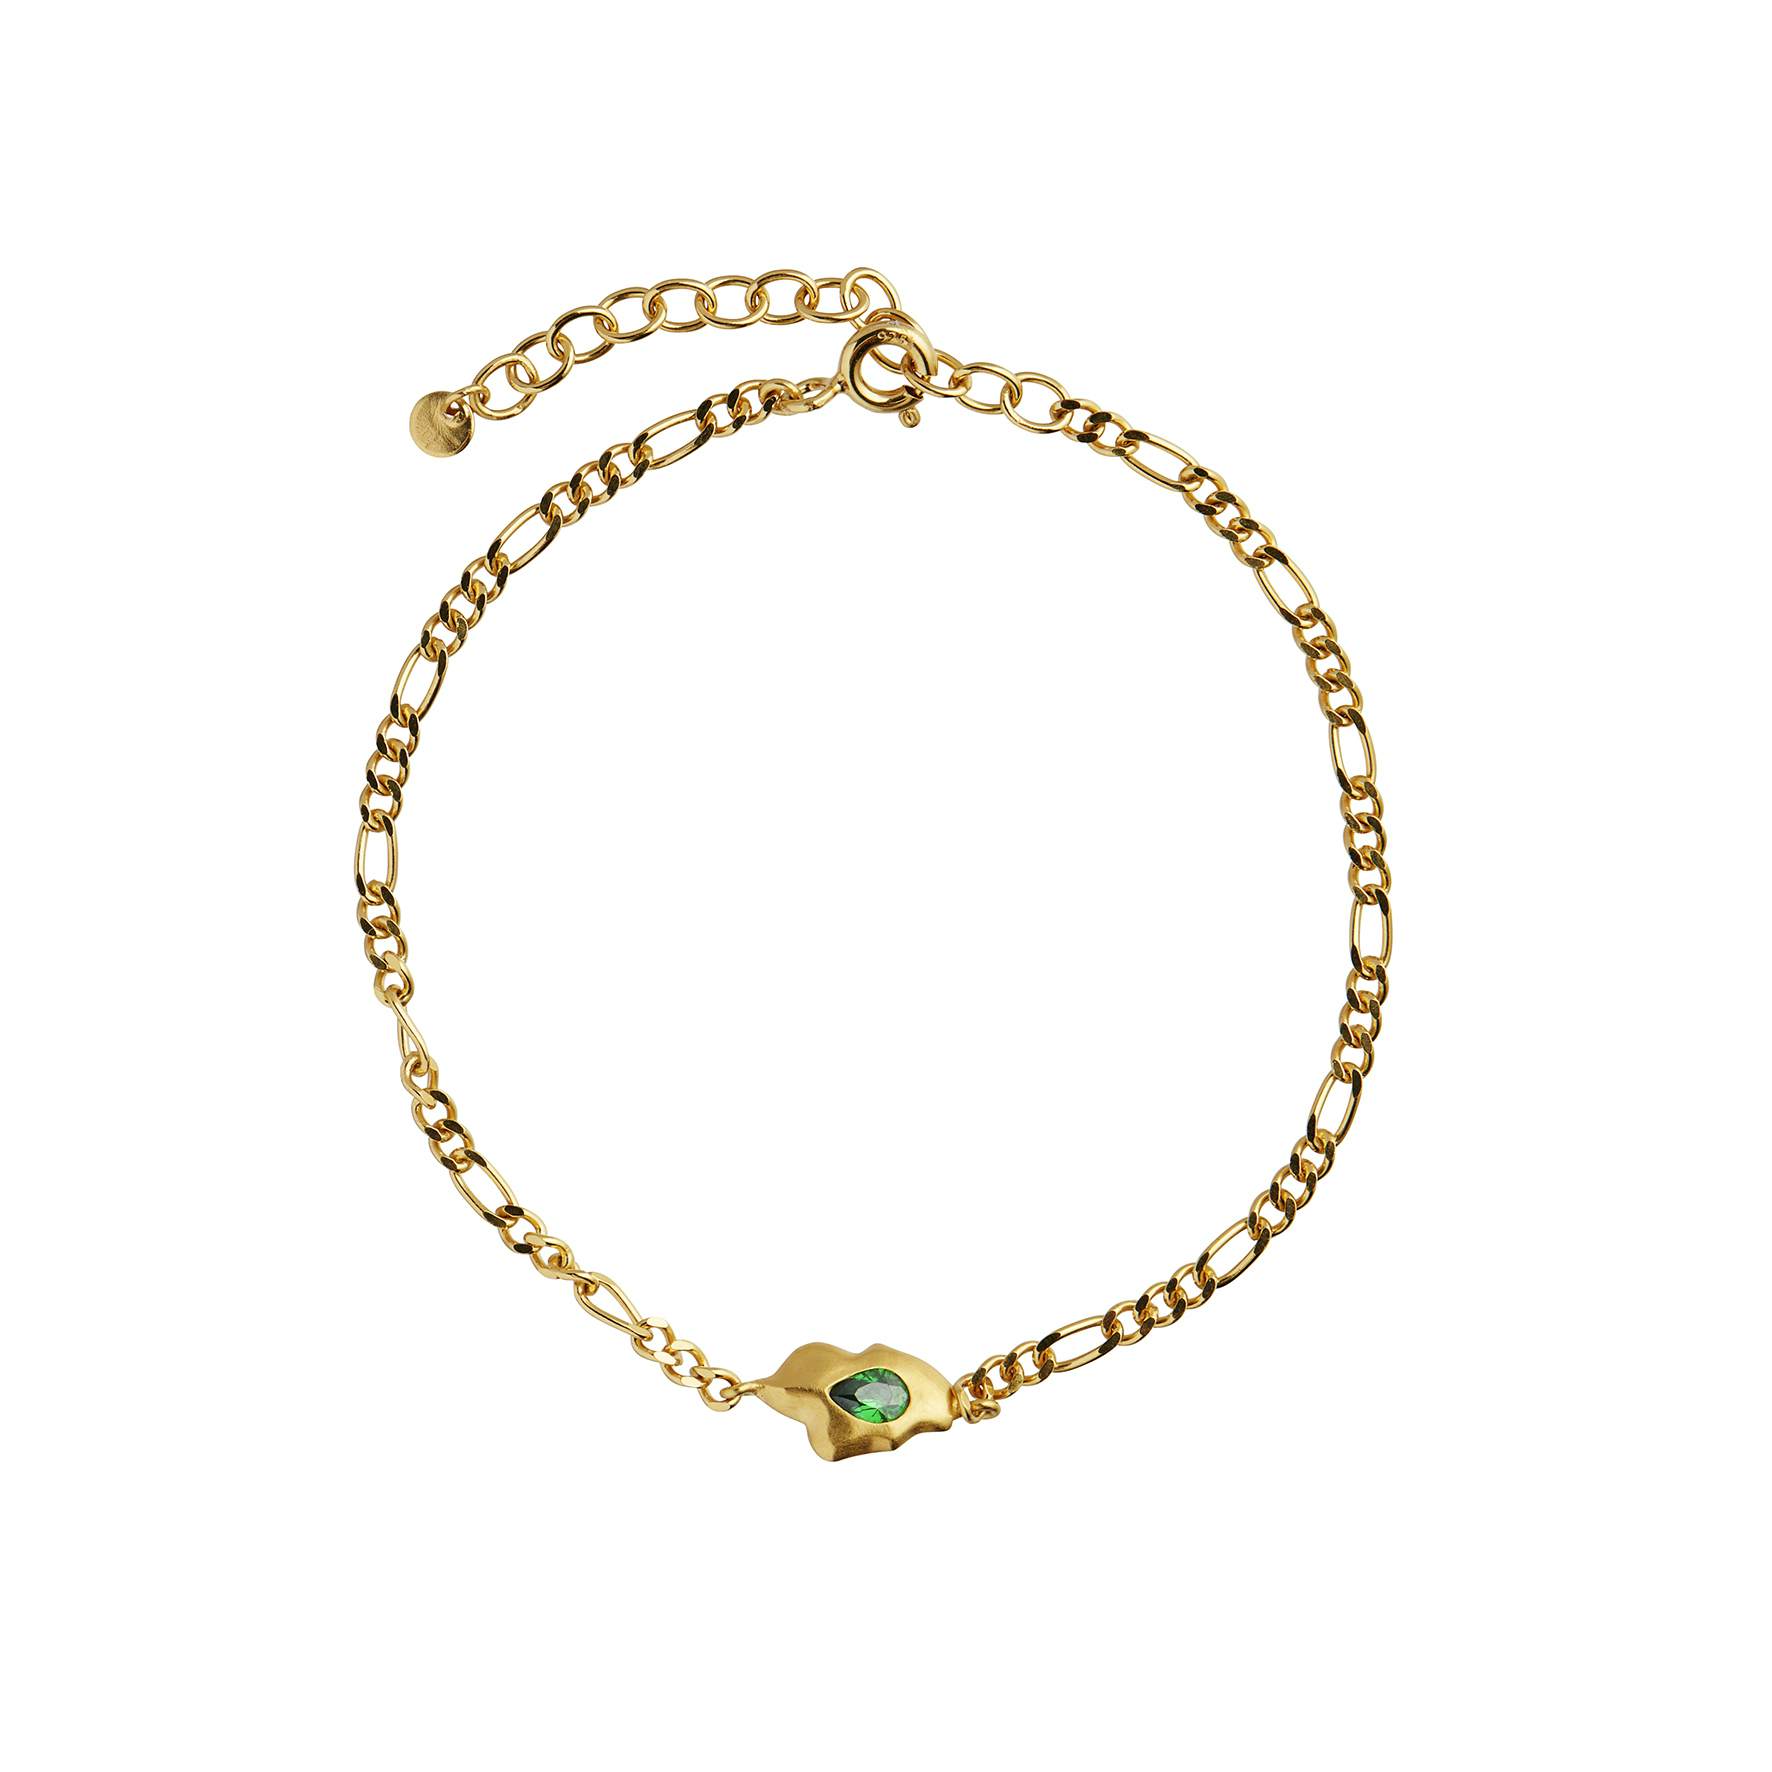 Glimpse Figaro Bracelet With Green Stone fra STINE A Jewelry i Forgylt-Sølv Sterling 925